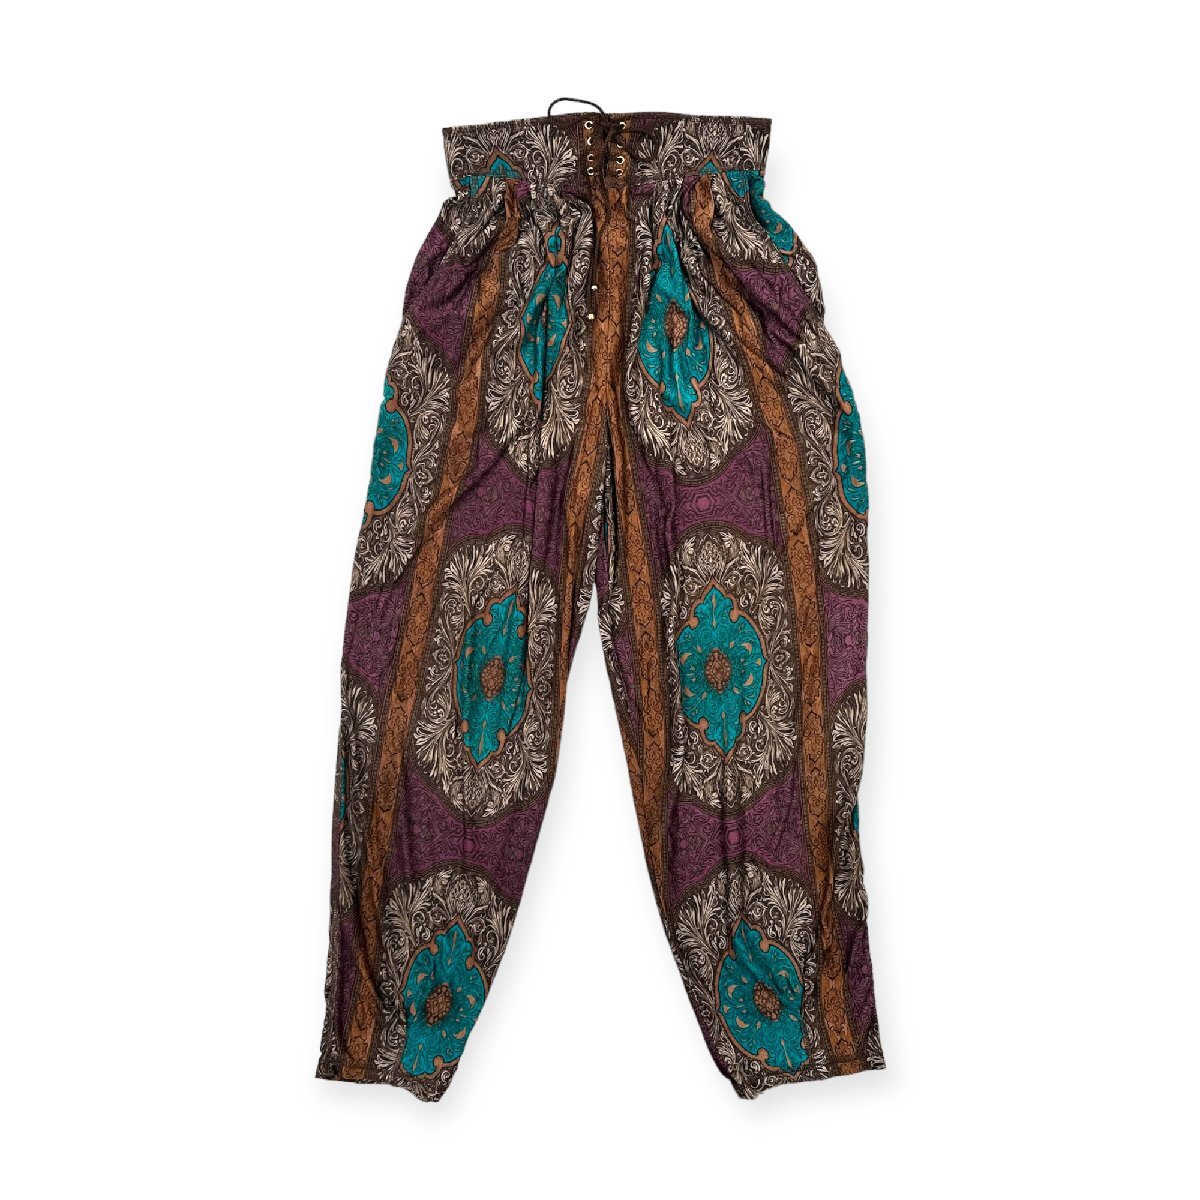  Italiya ita задний высокий талия общий рисунок Asian плетеный вверх легкий брюки низ Thai брюки тонкий нейлон 13/ женский 